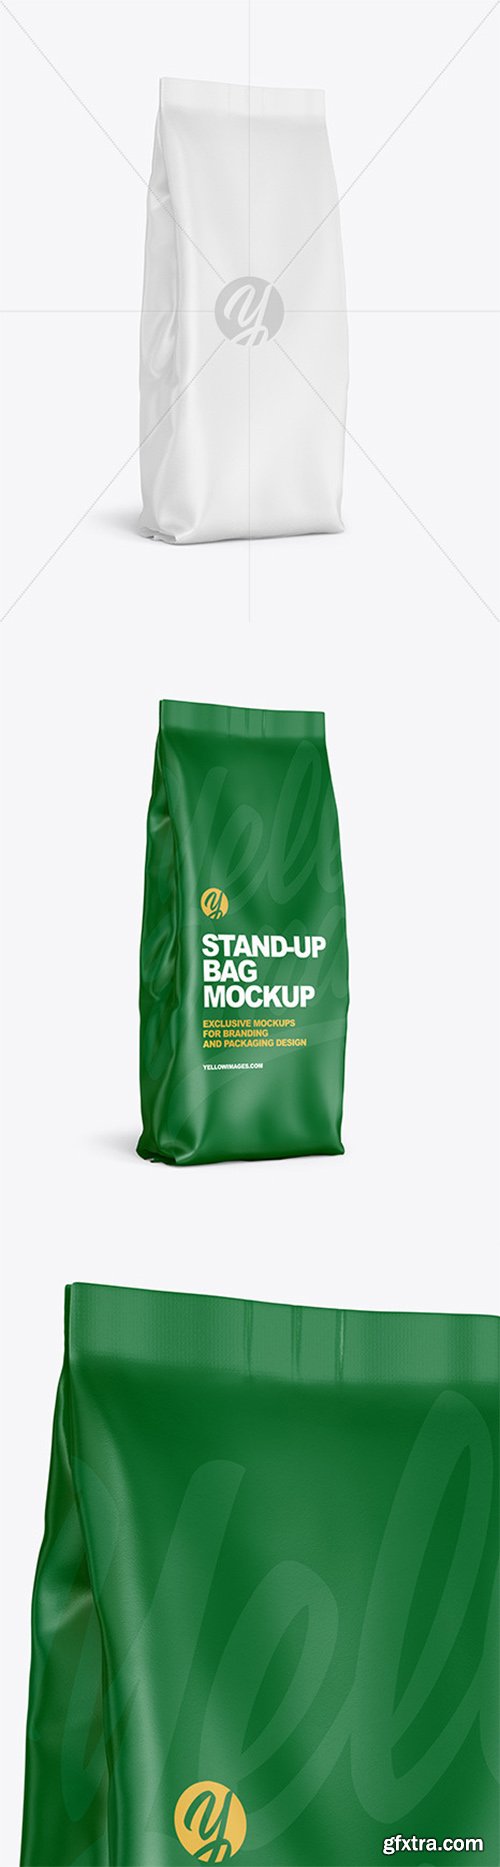 Paper Stand-up Bag Mockup 61650